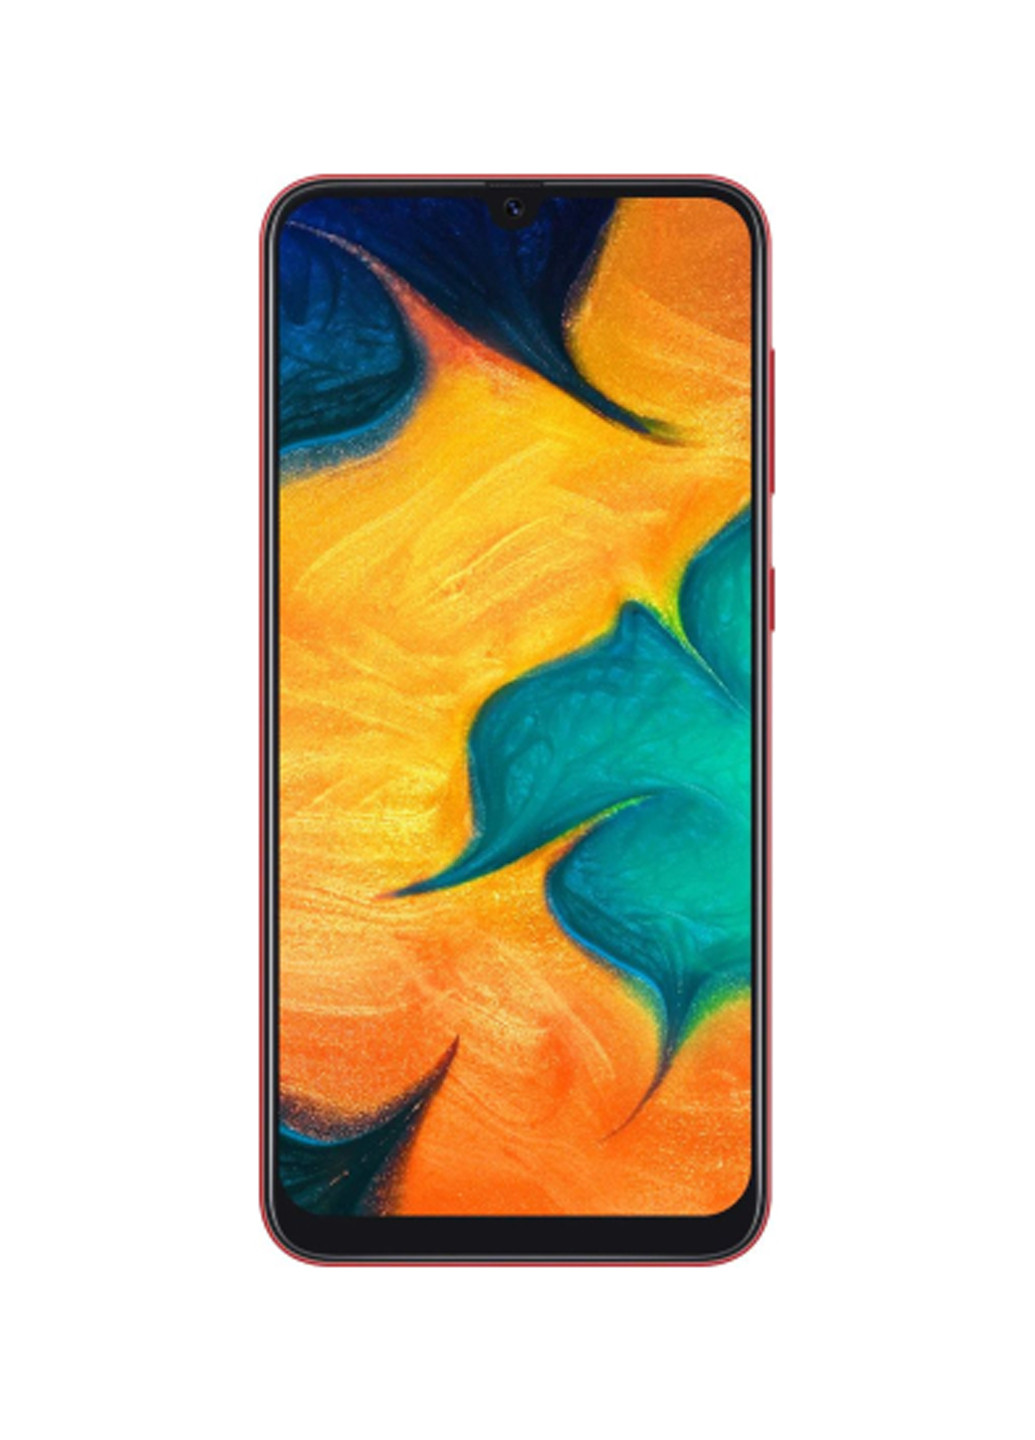 Смартфон Samsung galaxy a30 3/32gb red (sm-a305fzrusek) (131063855)